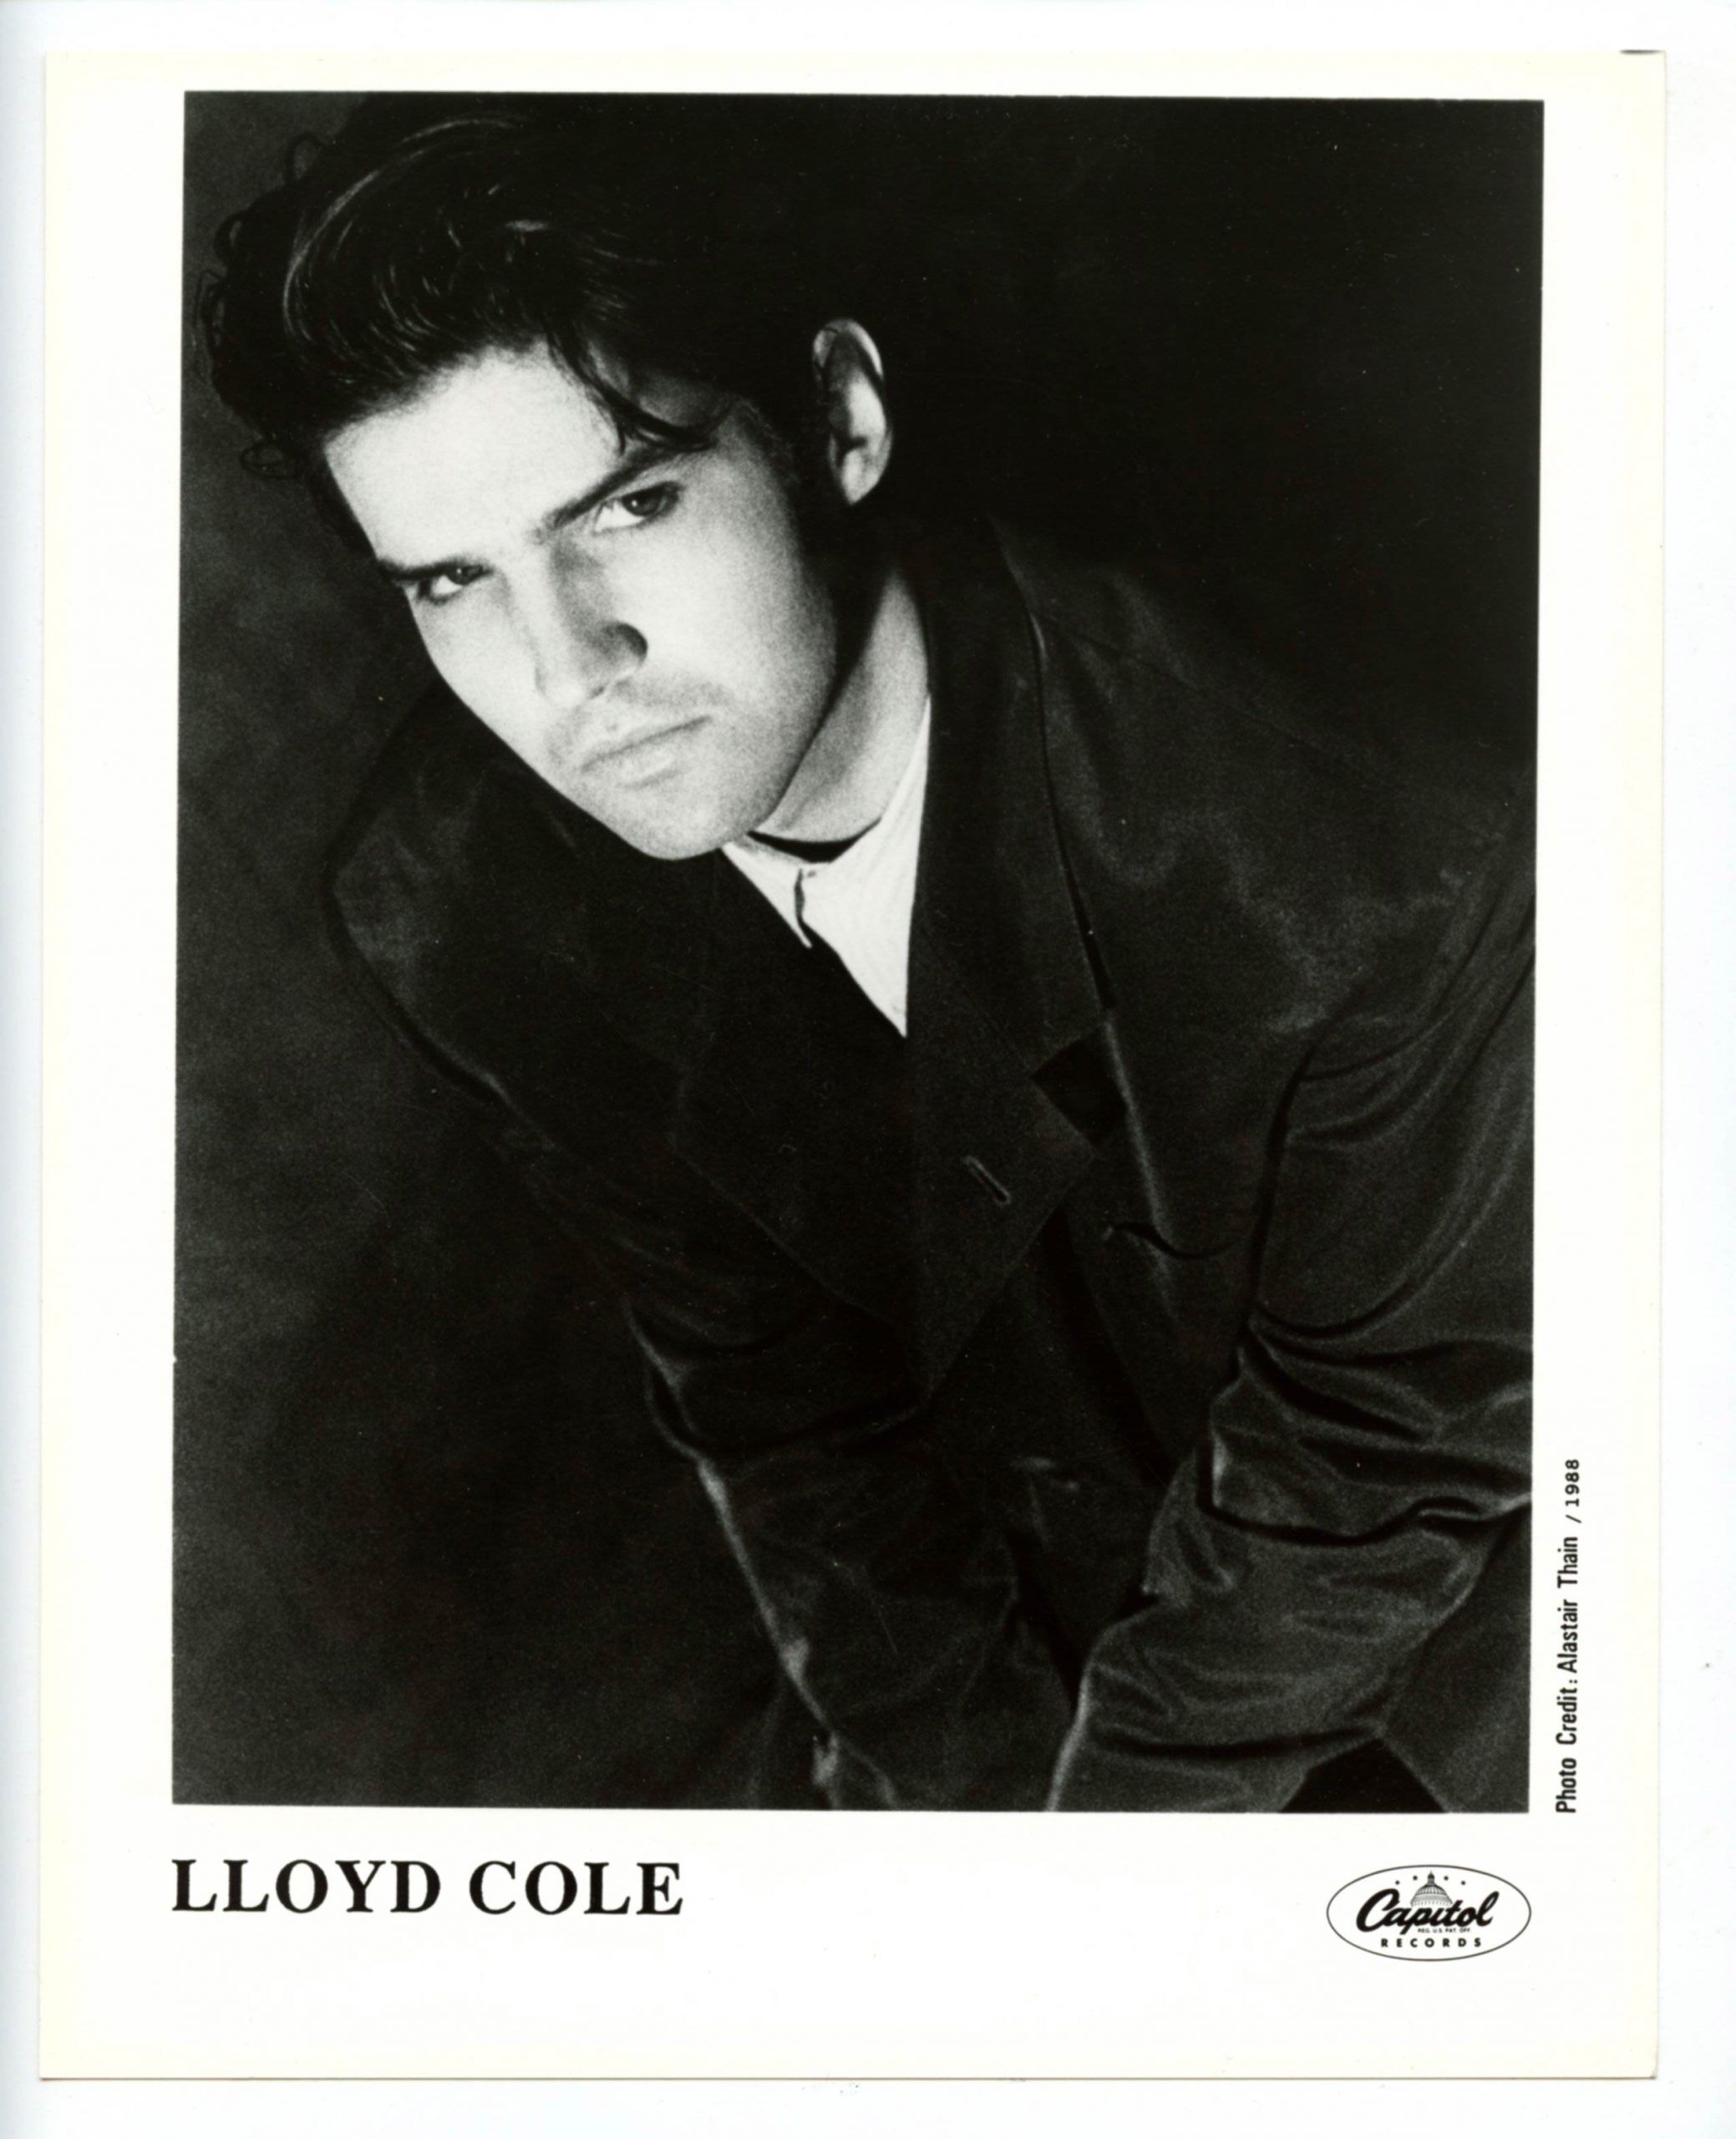 Lloyd Cole Photo 1988 Capitol Records